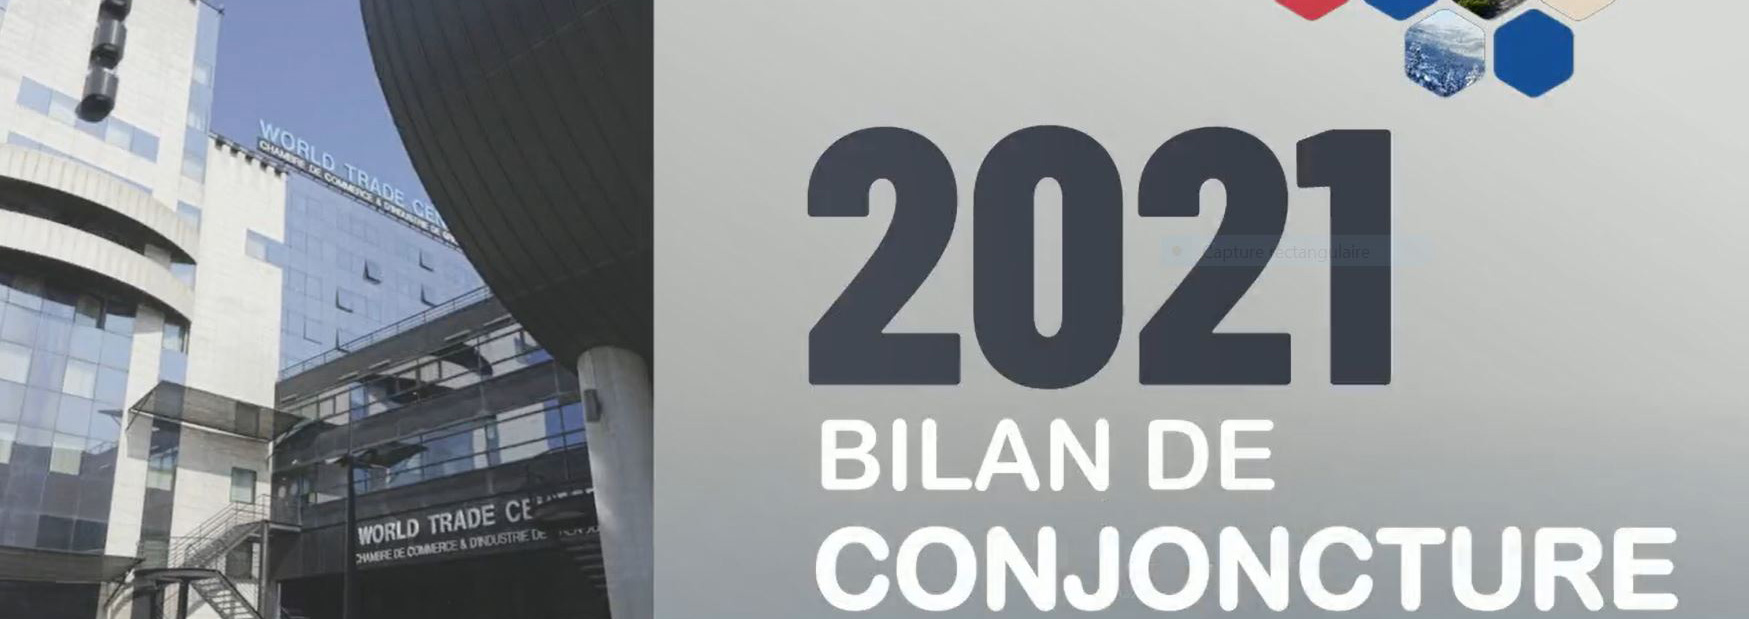 bilan de conjoncture 2021